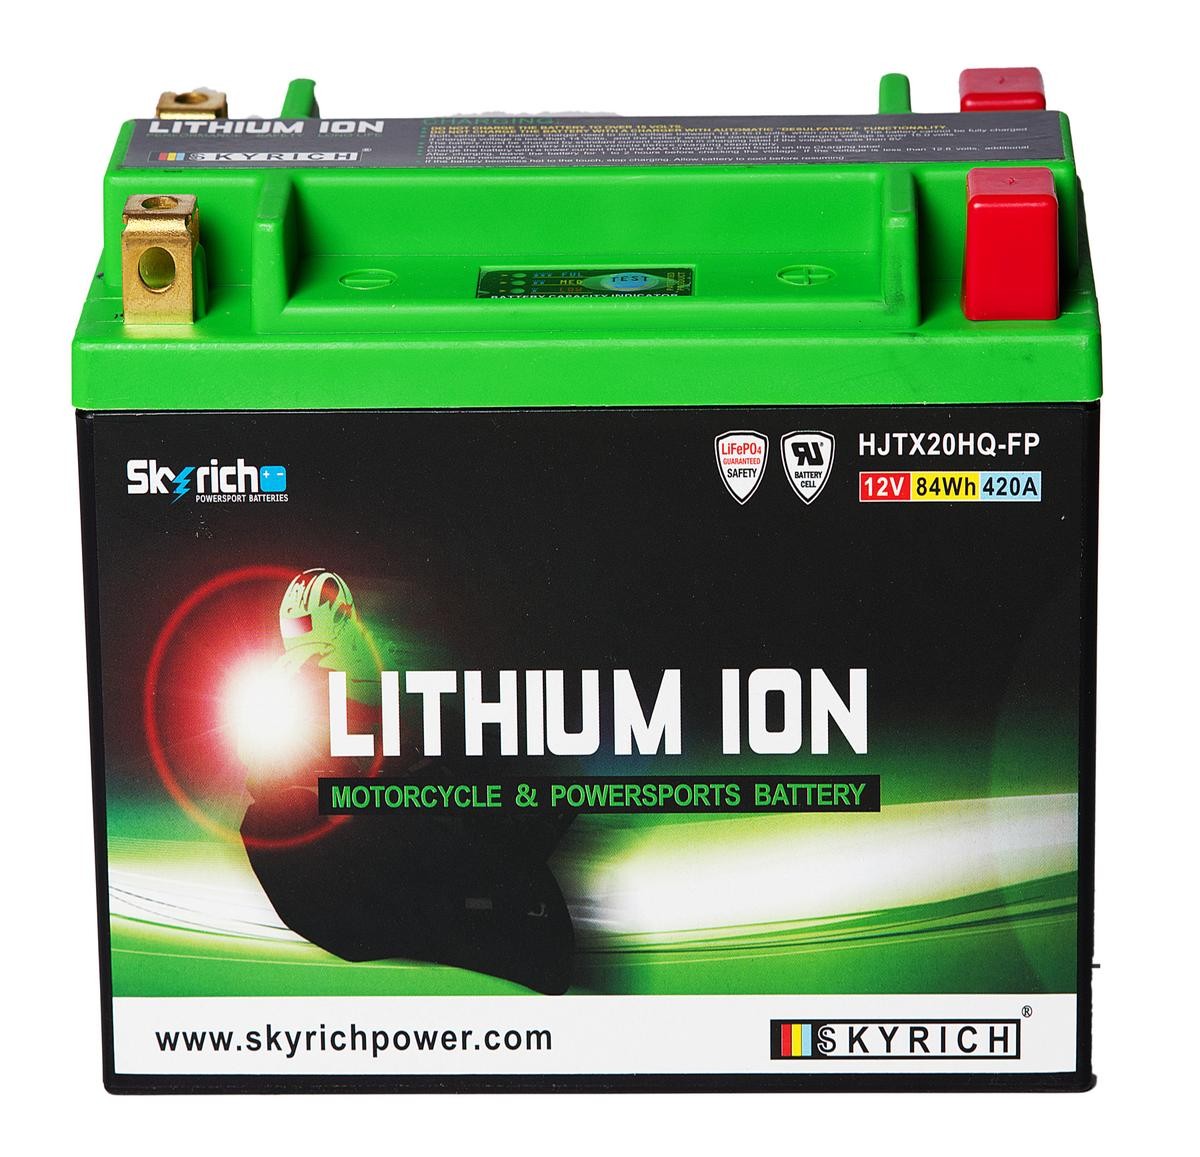 MOTO GUZZI NORGE Batterie 12V 7Ah 420A N Li-Ionen-Batterie SKYRICH LITHIUM ION HJTX20HQ-FP